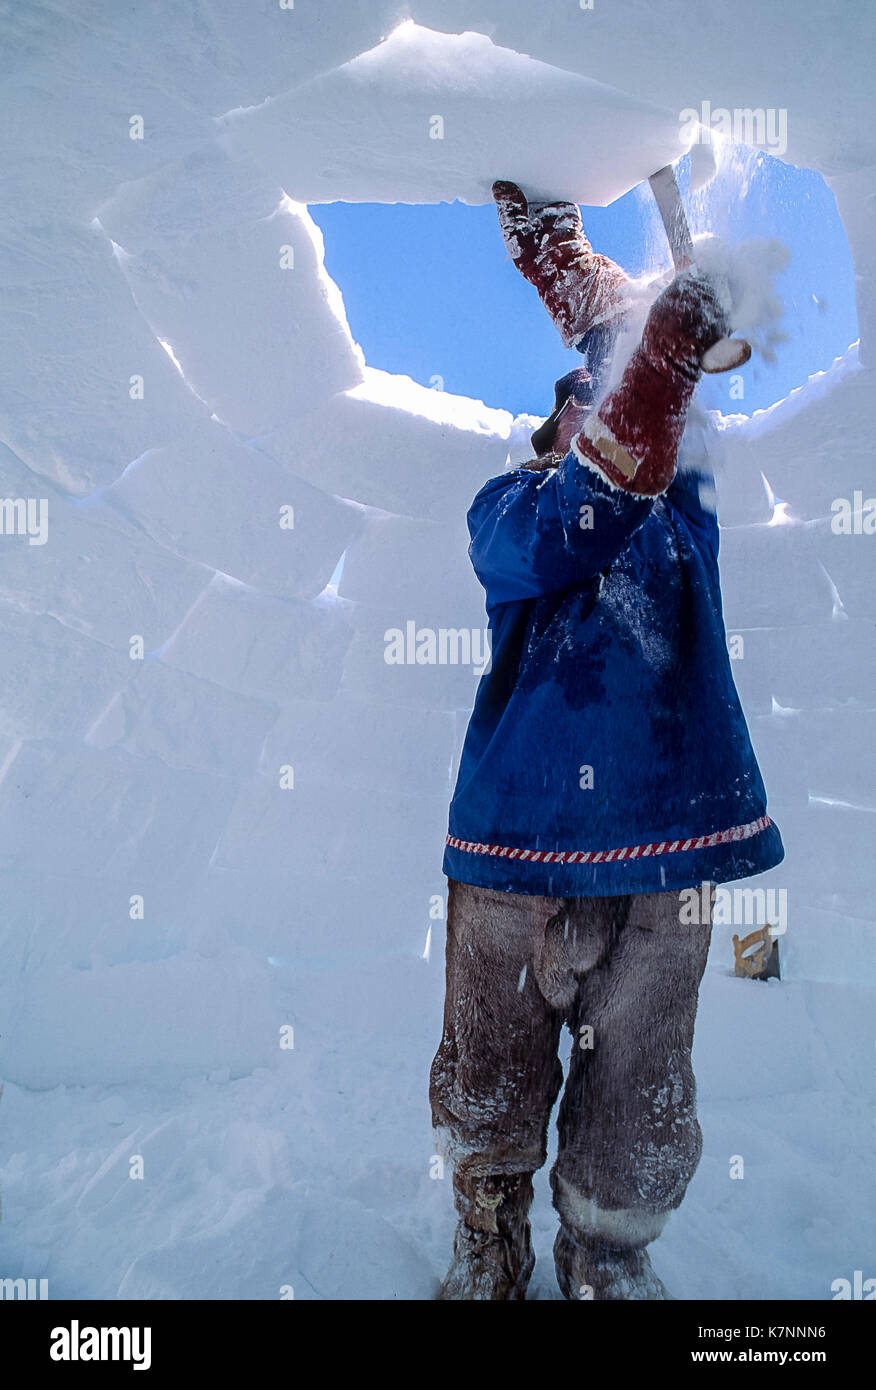 Inuit elder man, dressed in modern arctic clothing, builds igloo by ...